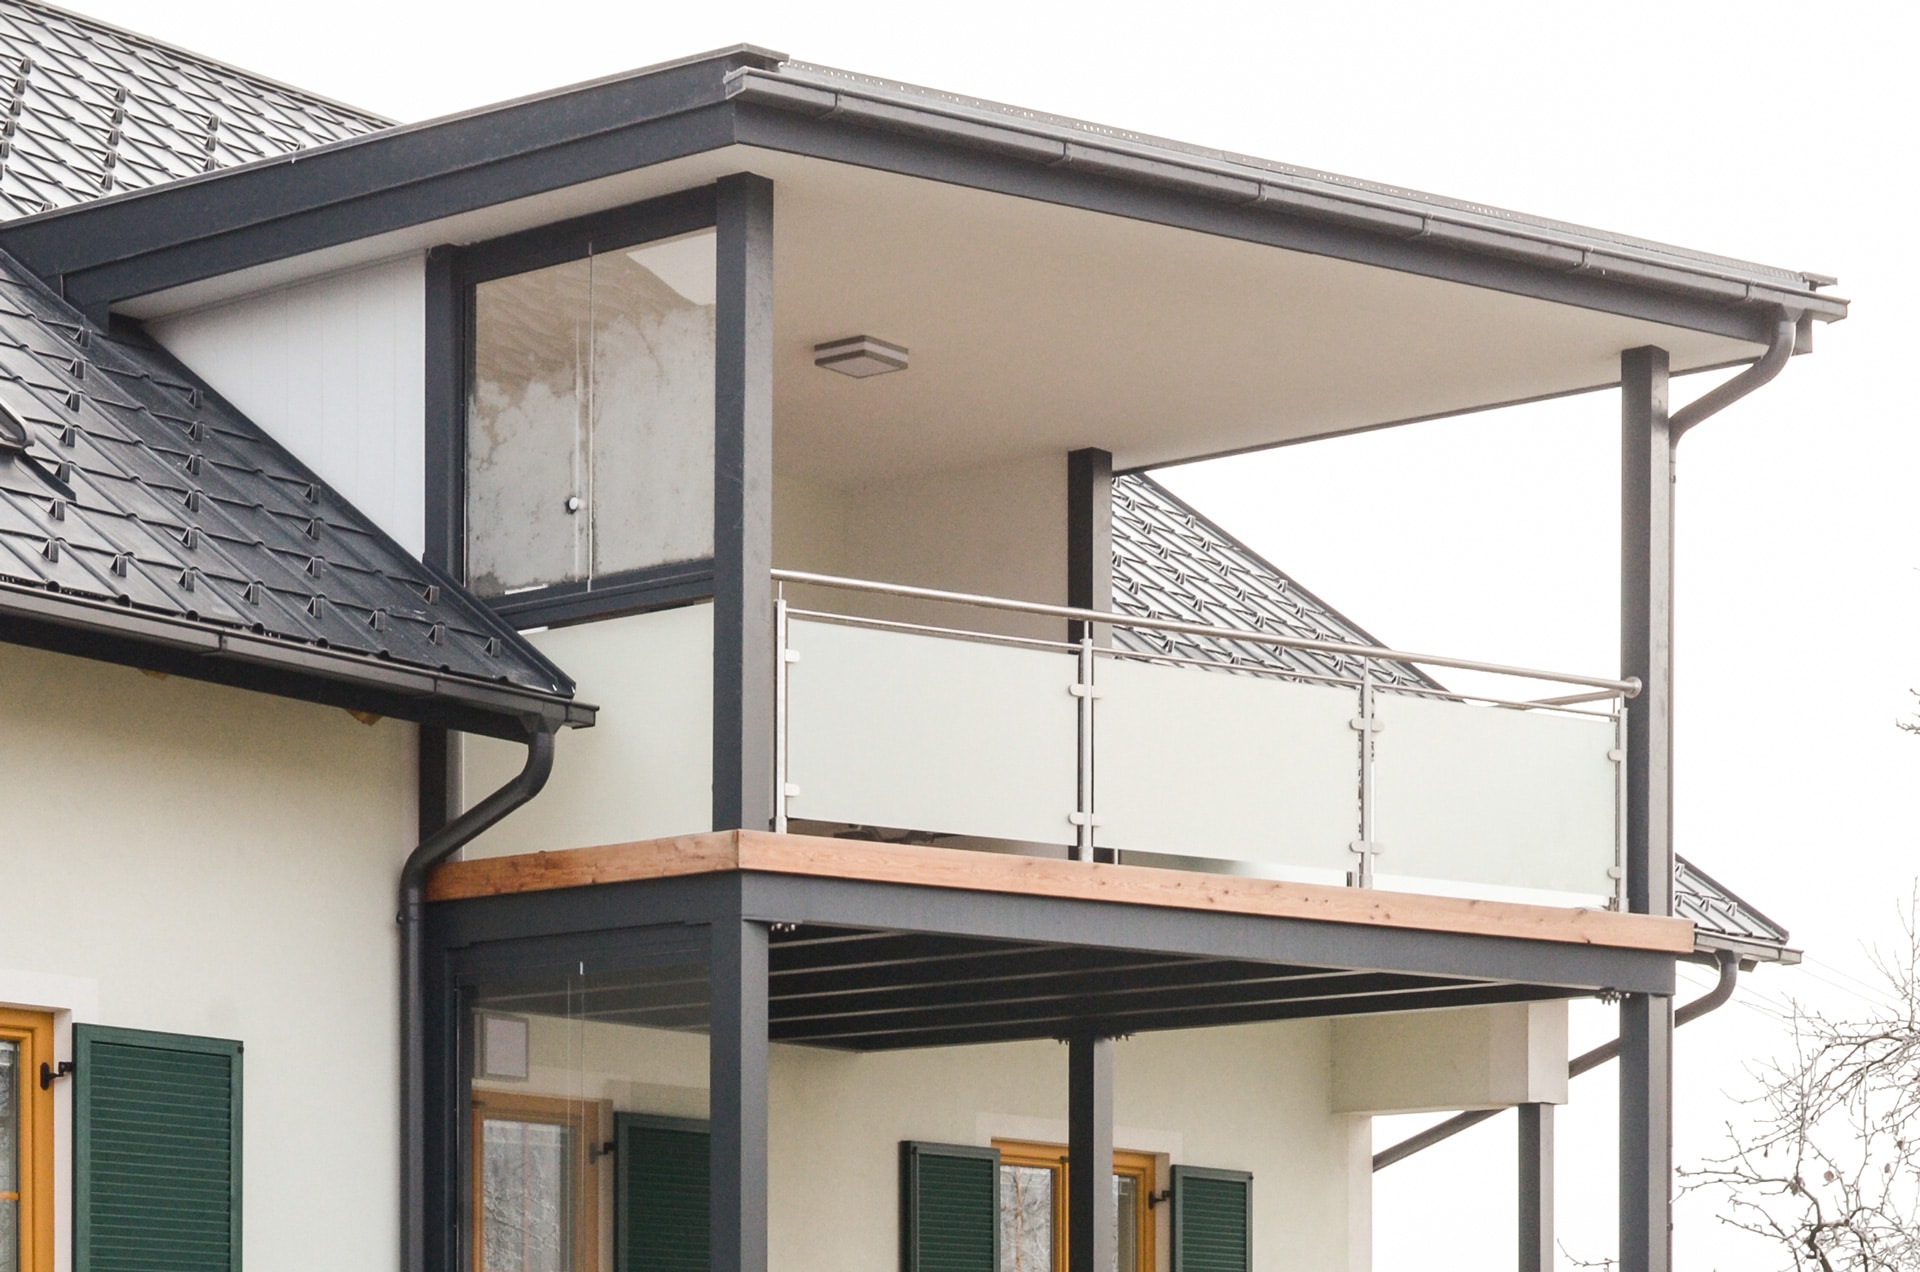 Zubau 09 a | Zweistöckiger Terrassenanbau inkl. Dachgeschoss aus Alu, Holzboden, Geländer | Svoboda